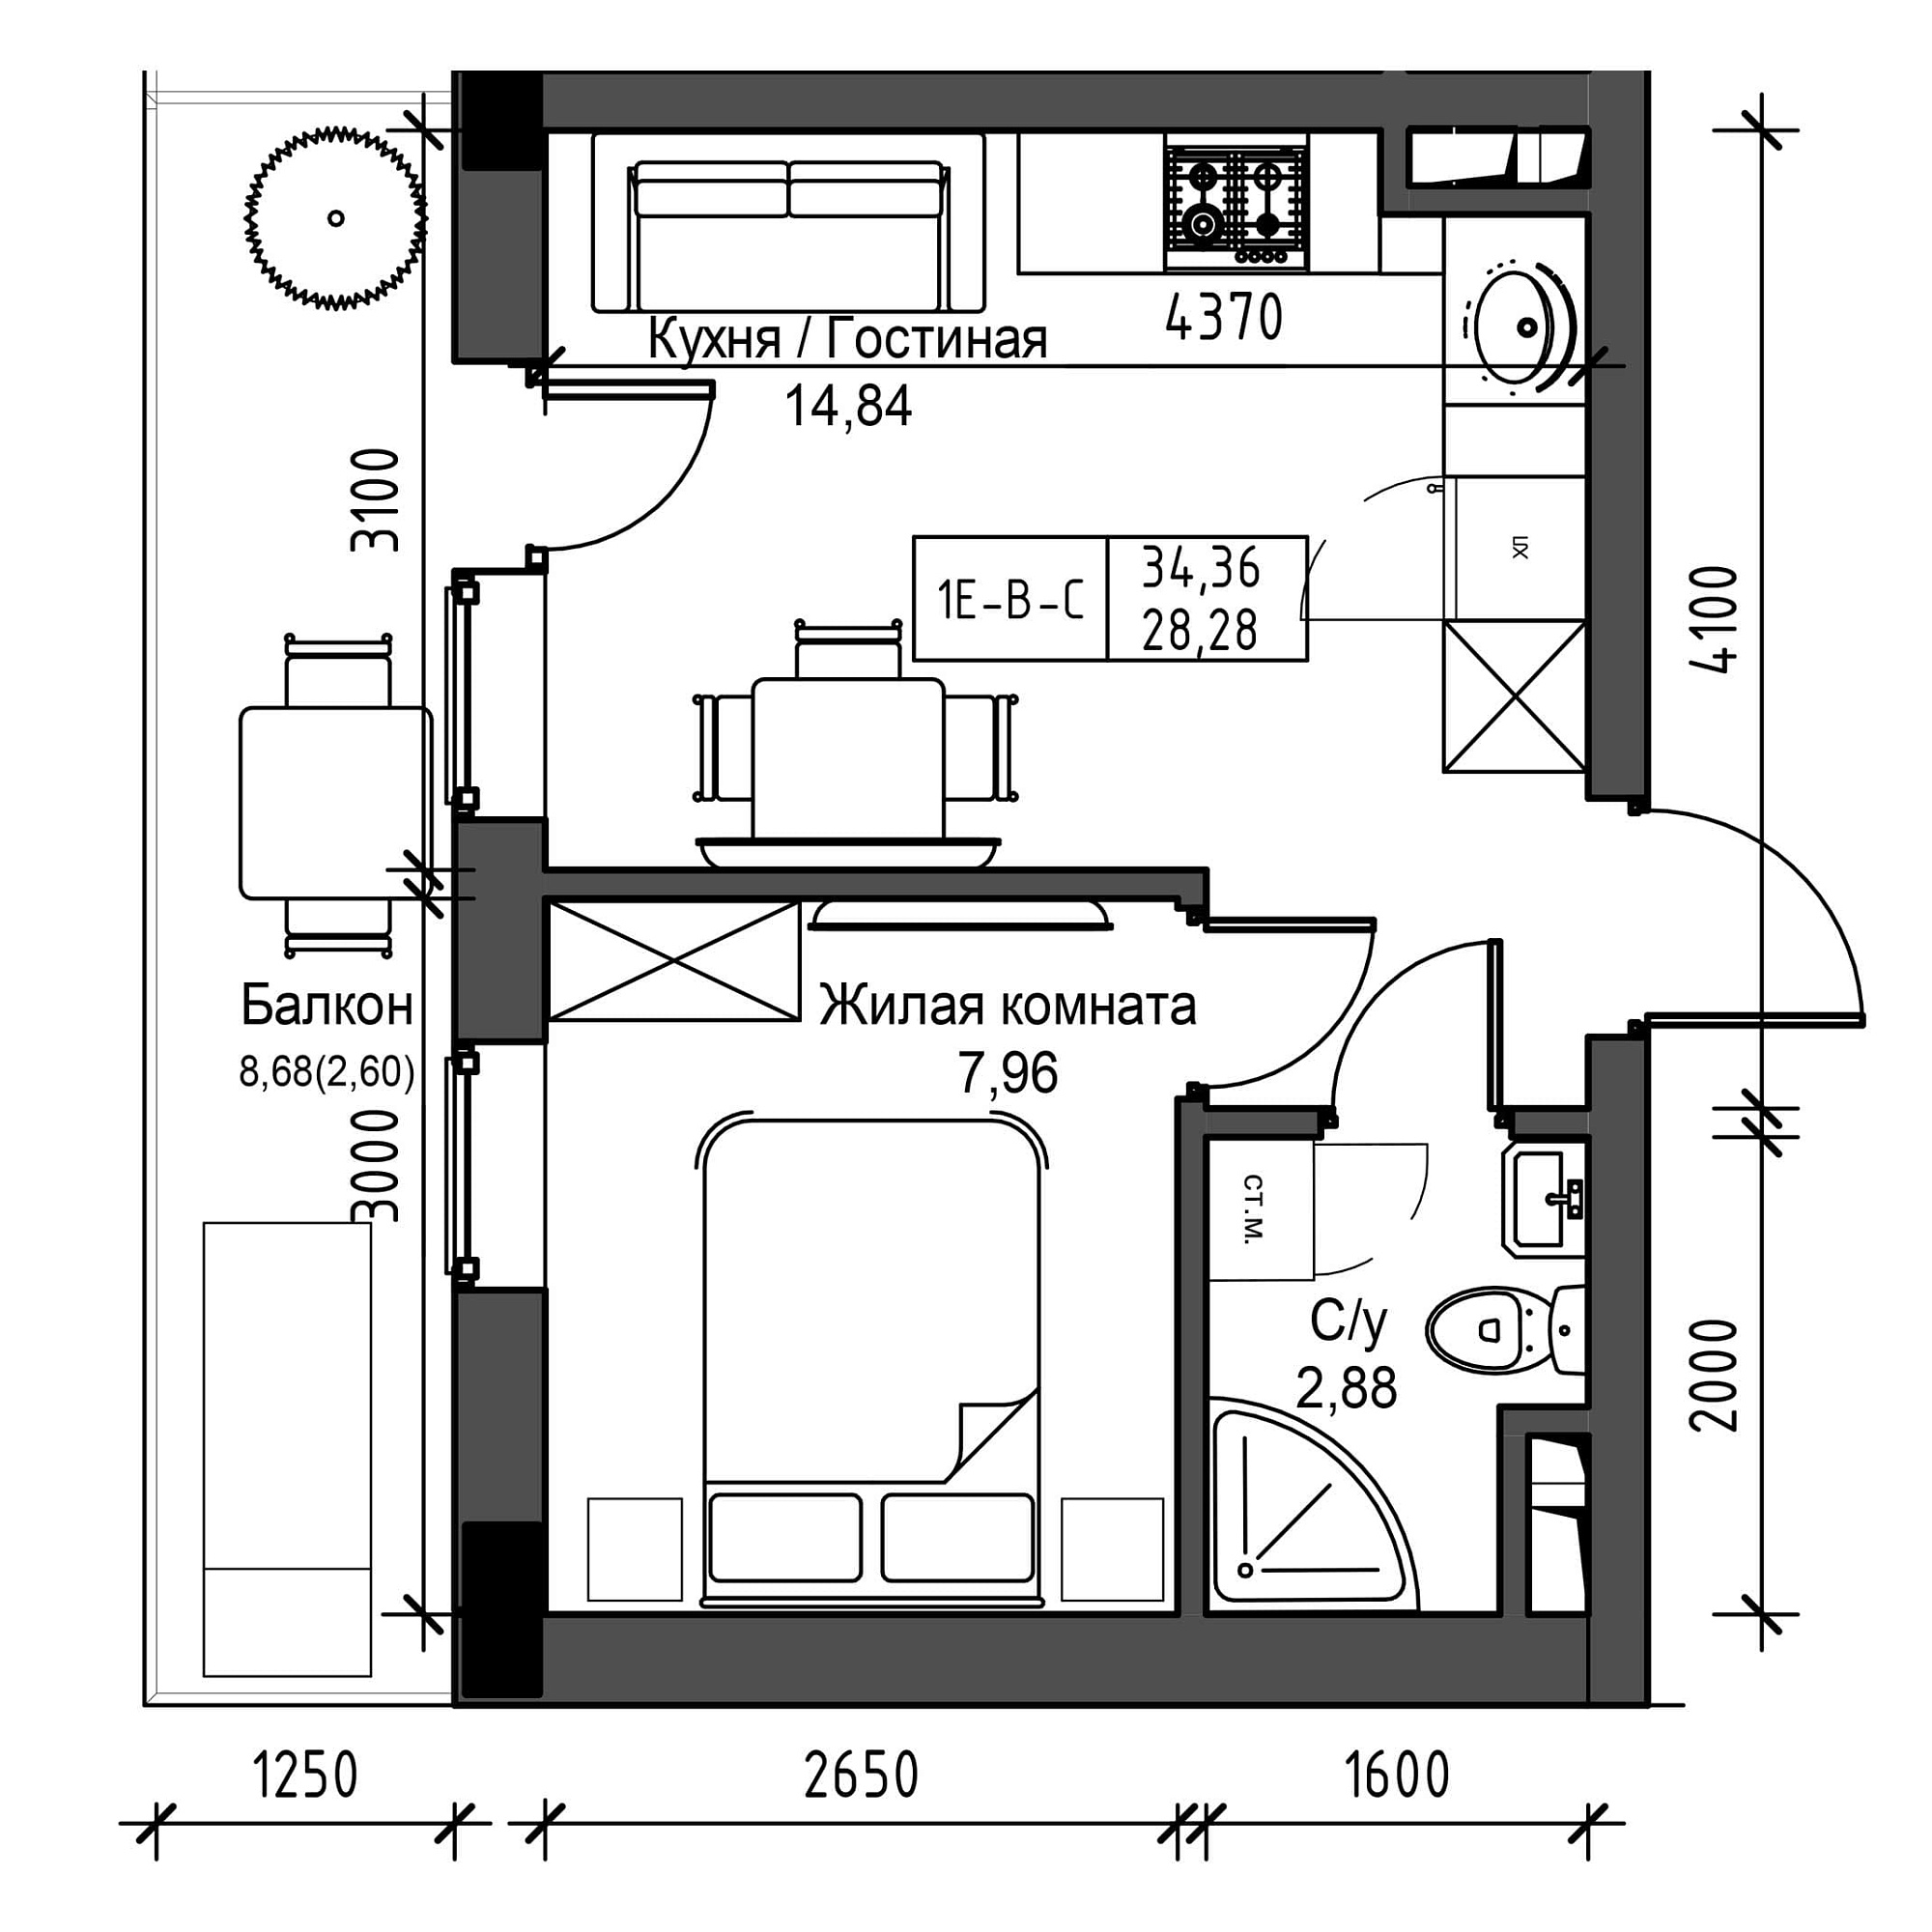 Planning 1-rm flats area 28.28m2, UM-001-06/0014.